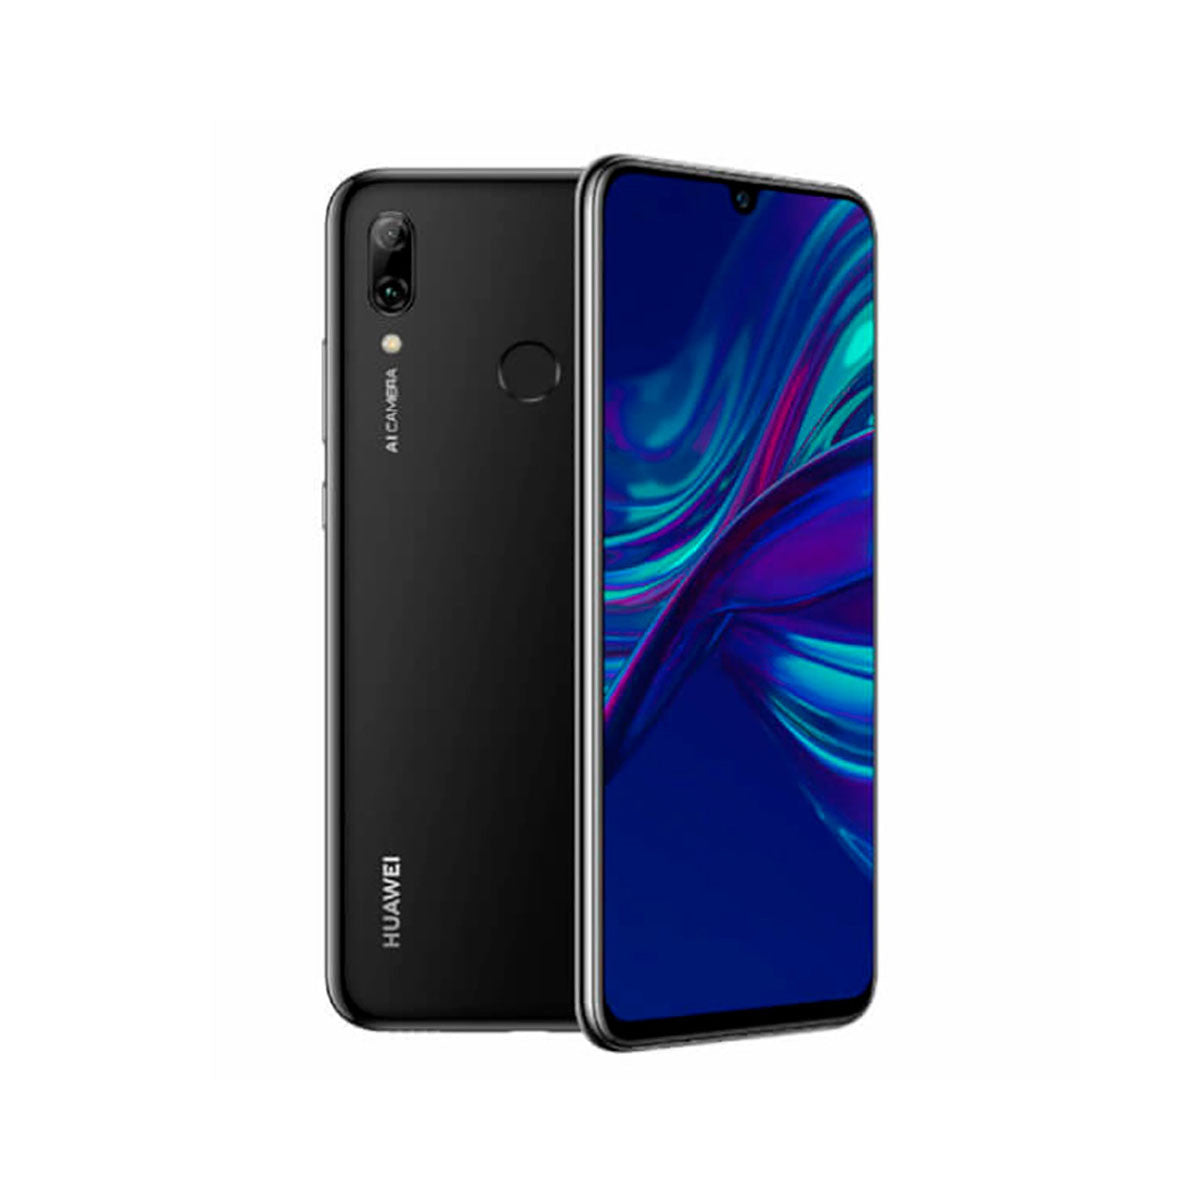 Huawei P Smart (2019) 3GB/64GB Black Single SIM Smartphone | Huawei